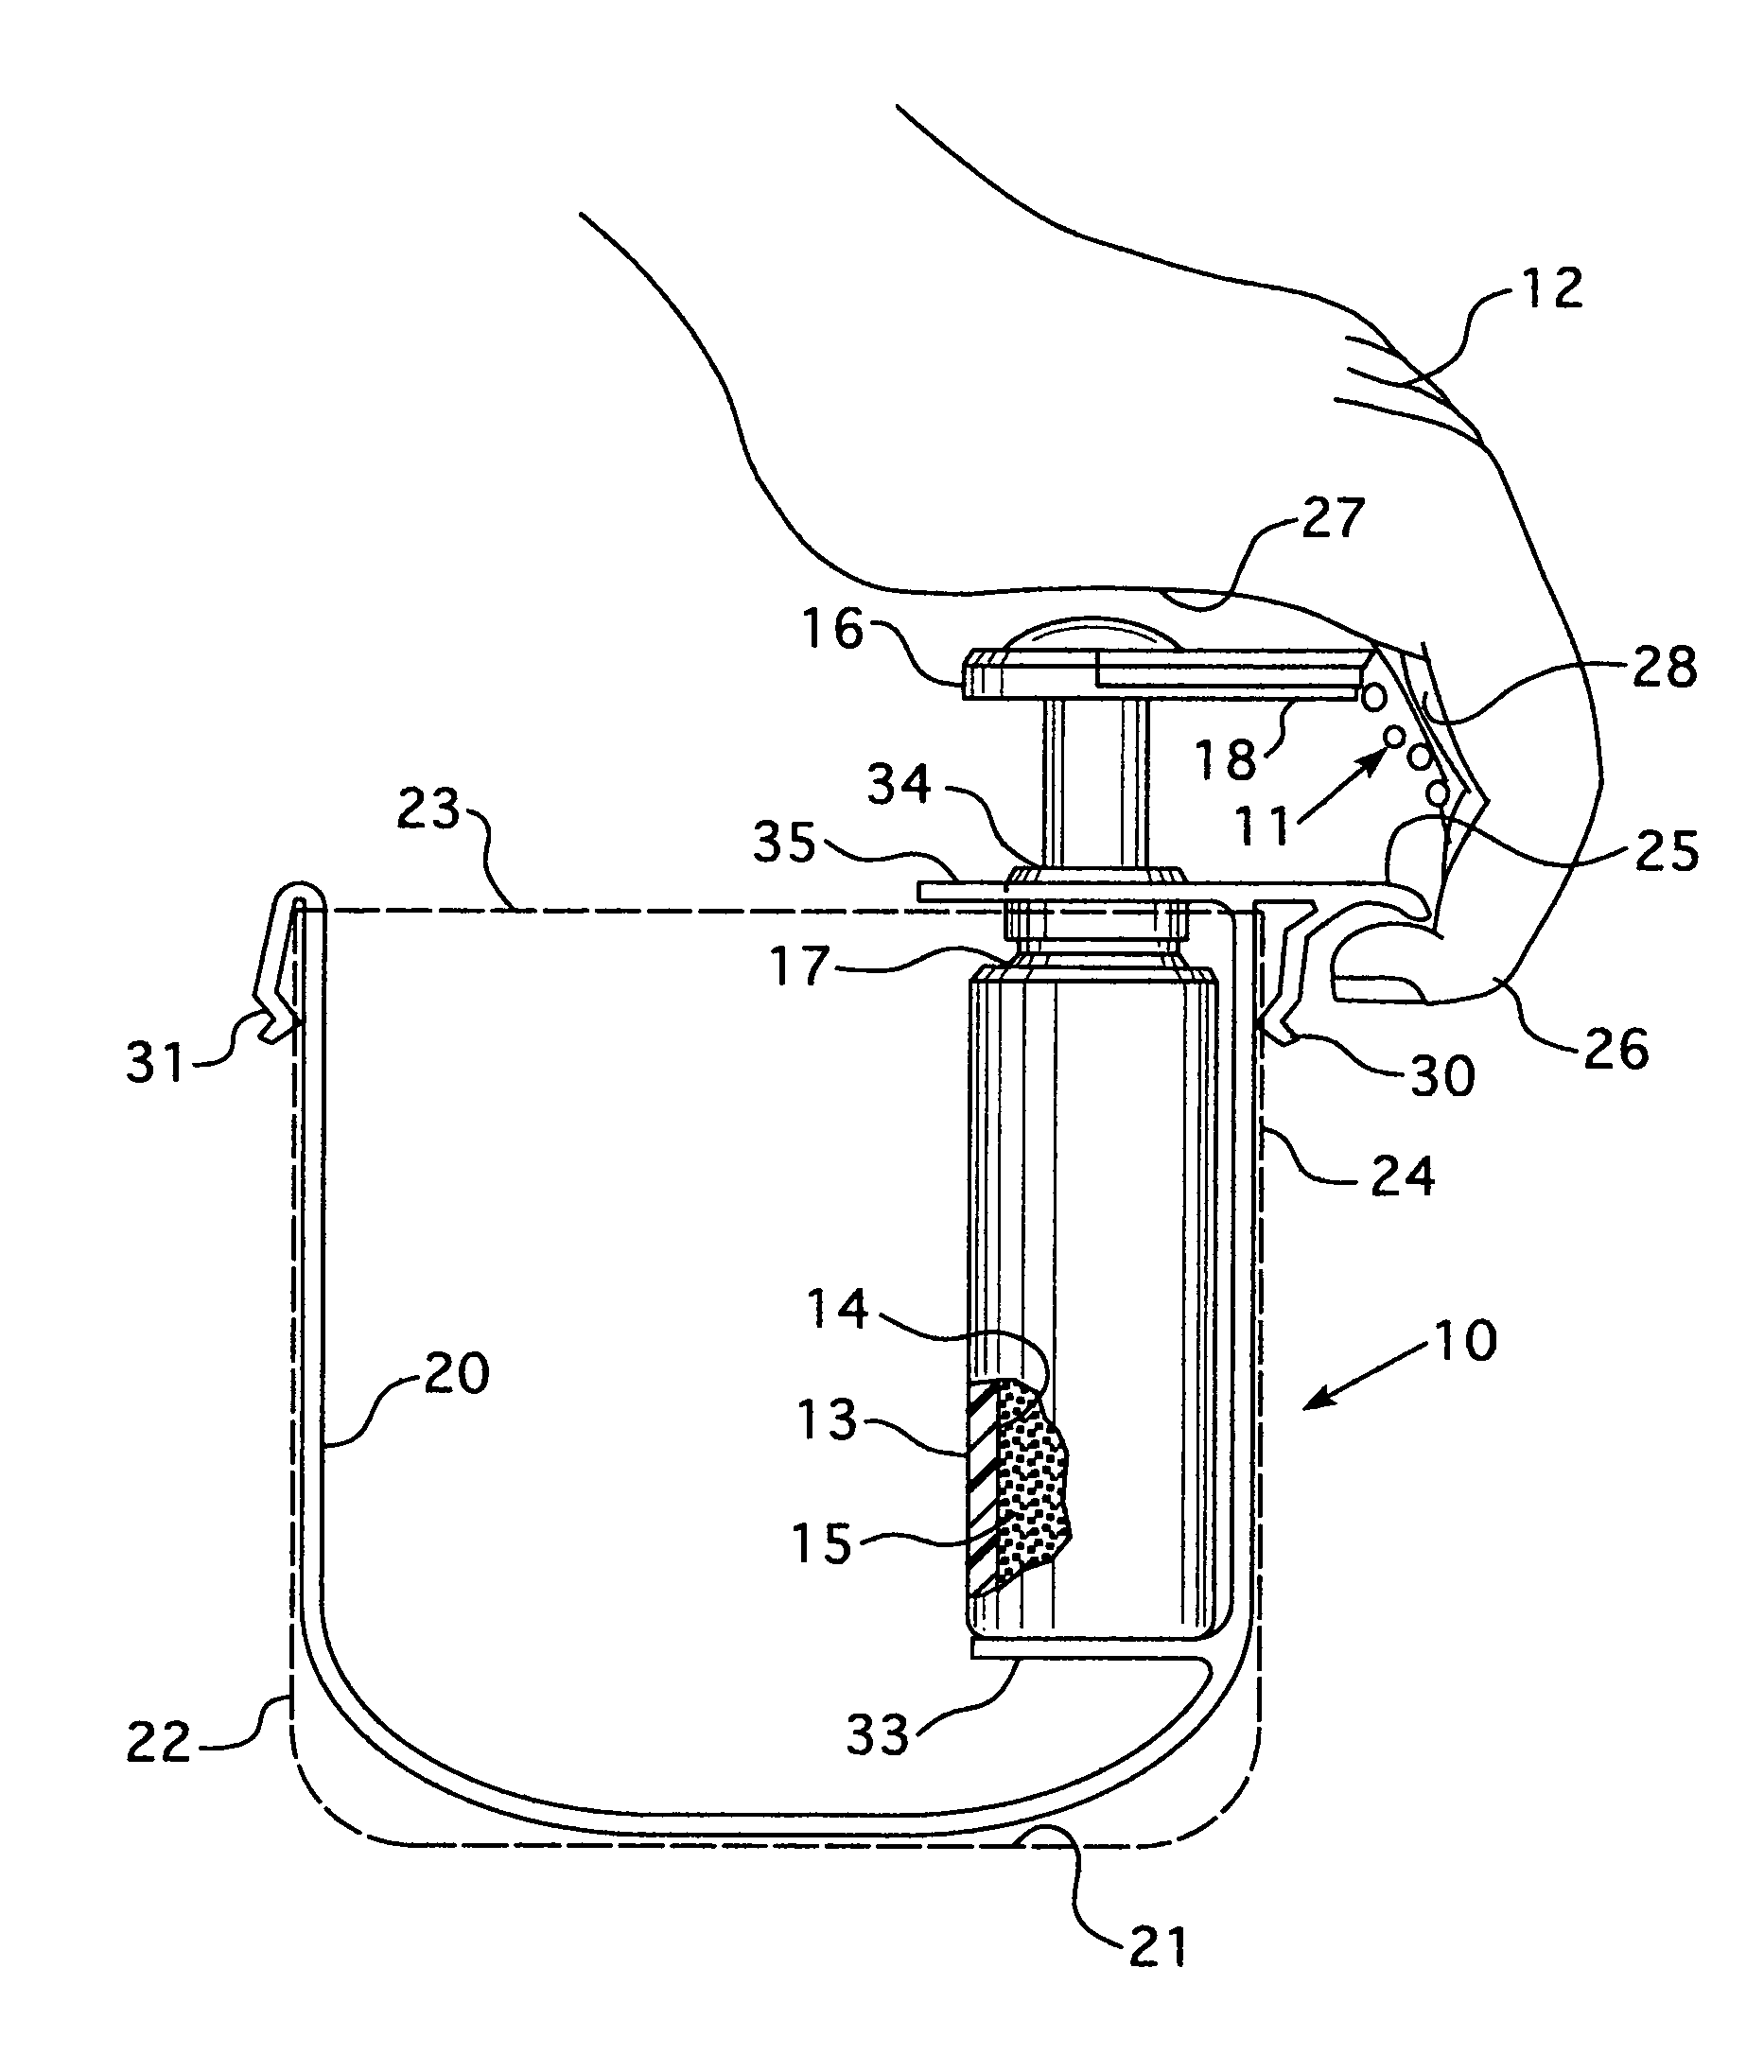 Pocket supported dispenser OFR dispensing disinfecting fluid